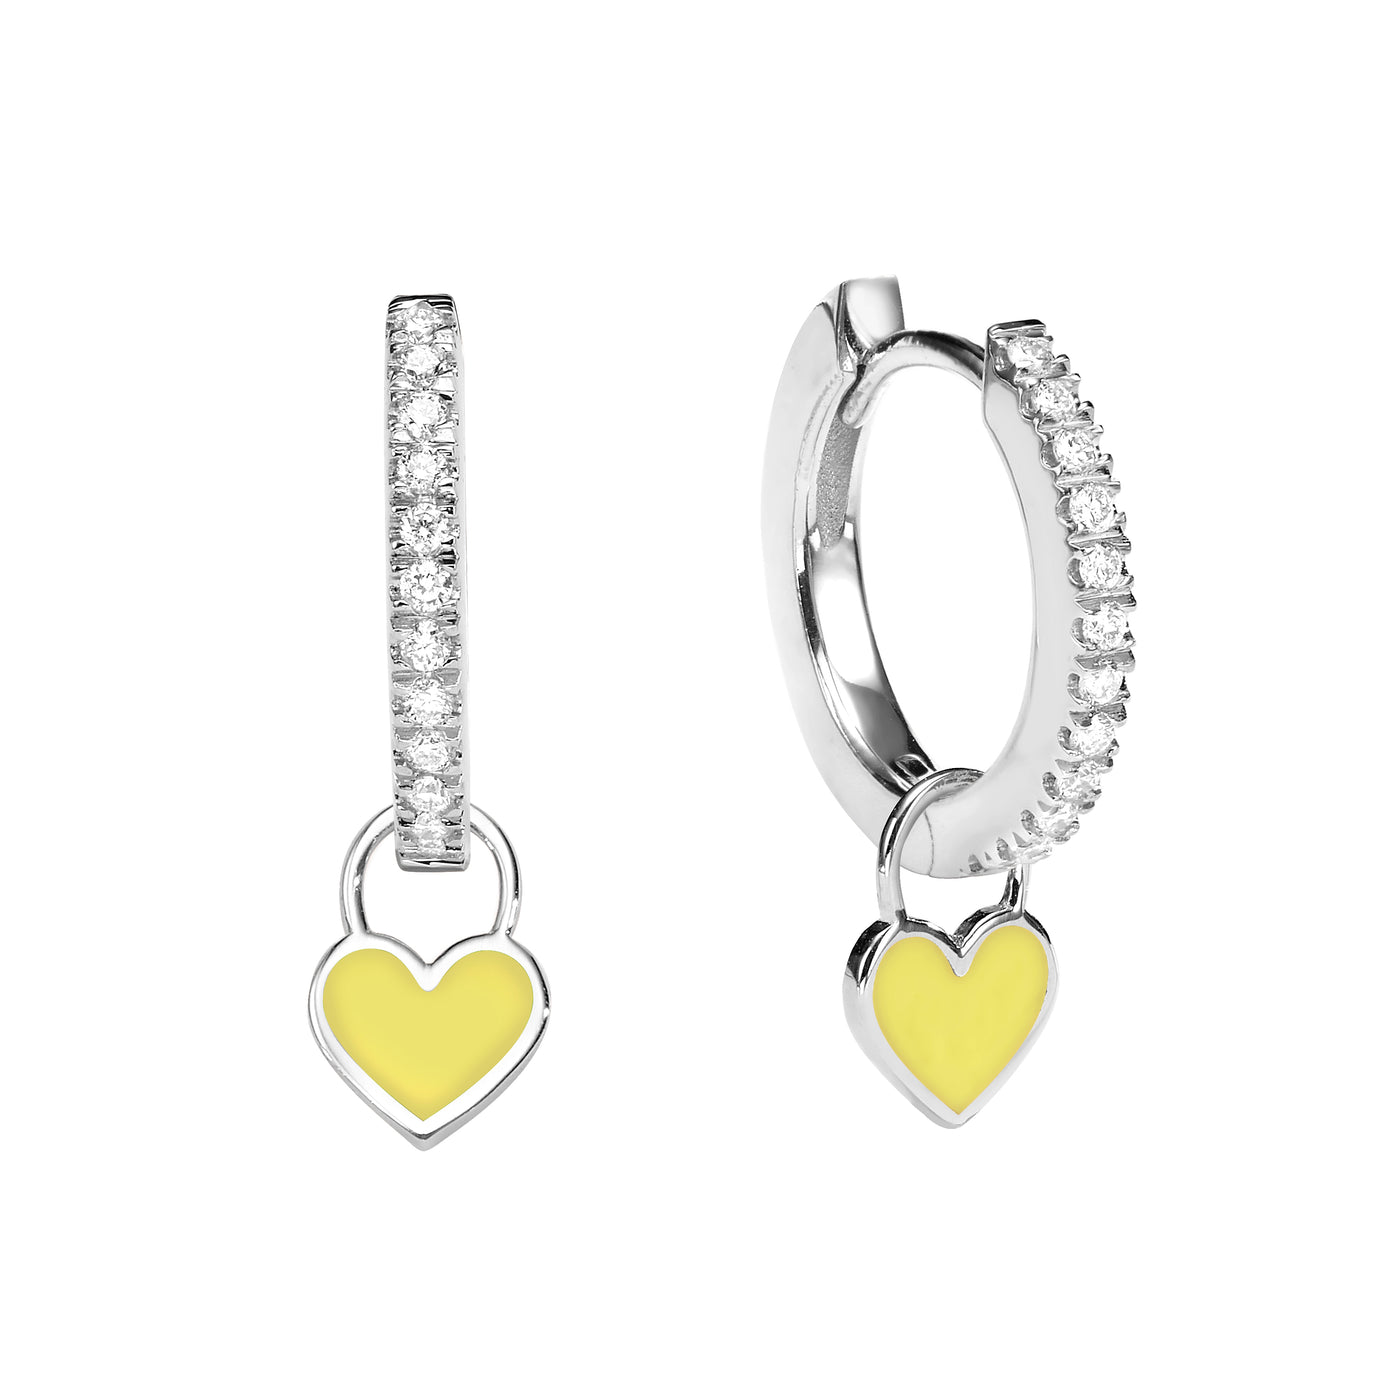 Midi Gypsy hearts earrings- Lemon Yellow